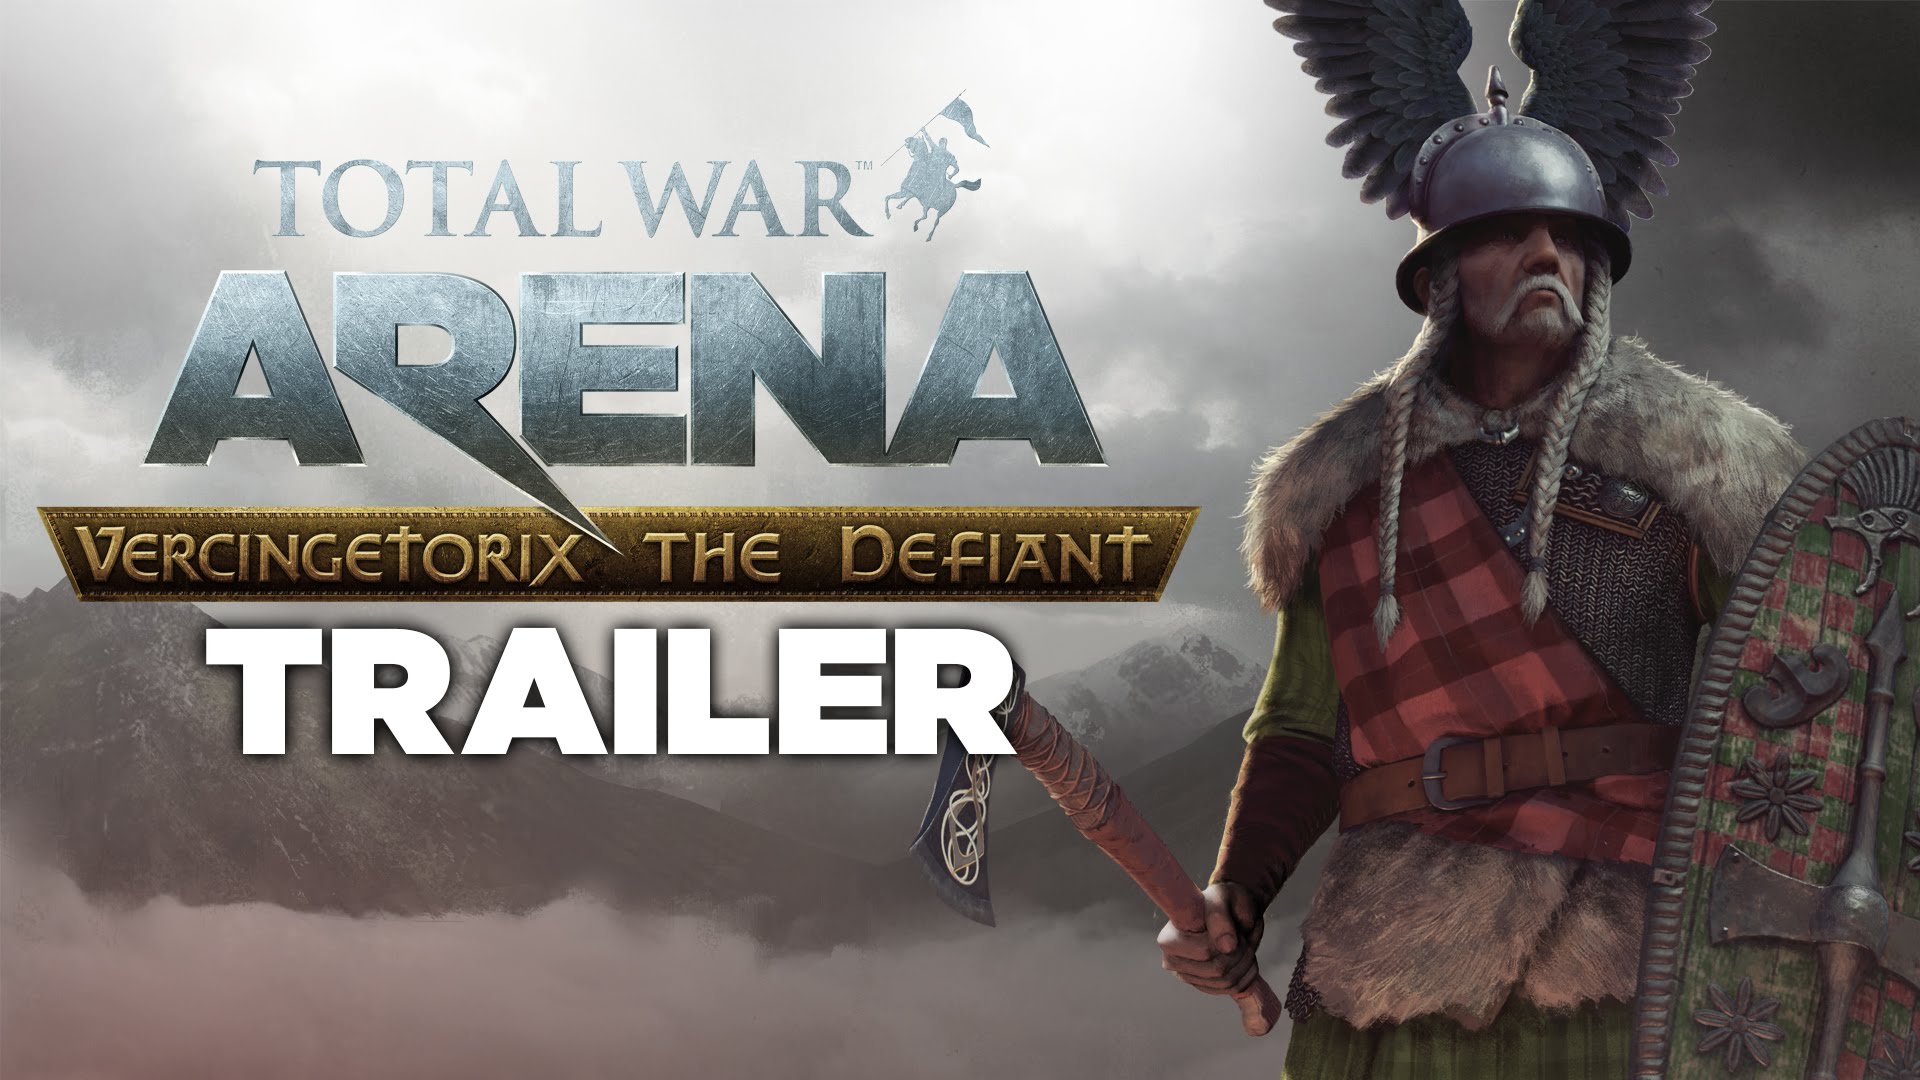 Total War: ARENA - Vercingetorix The Defiant trailer